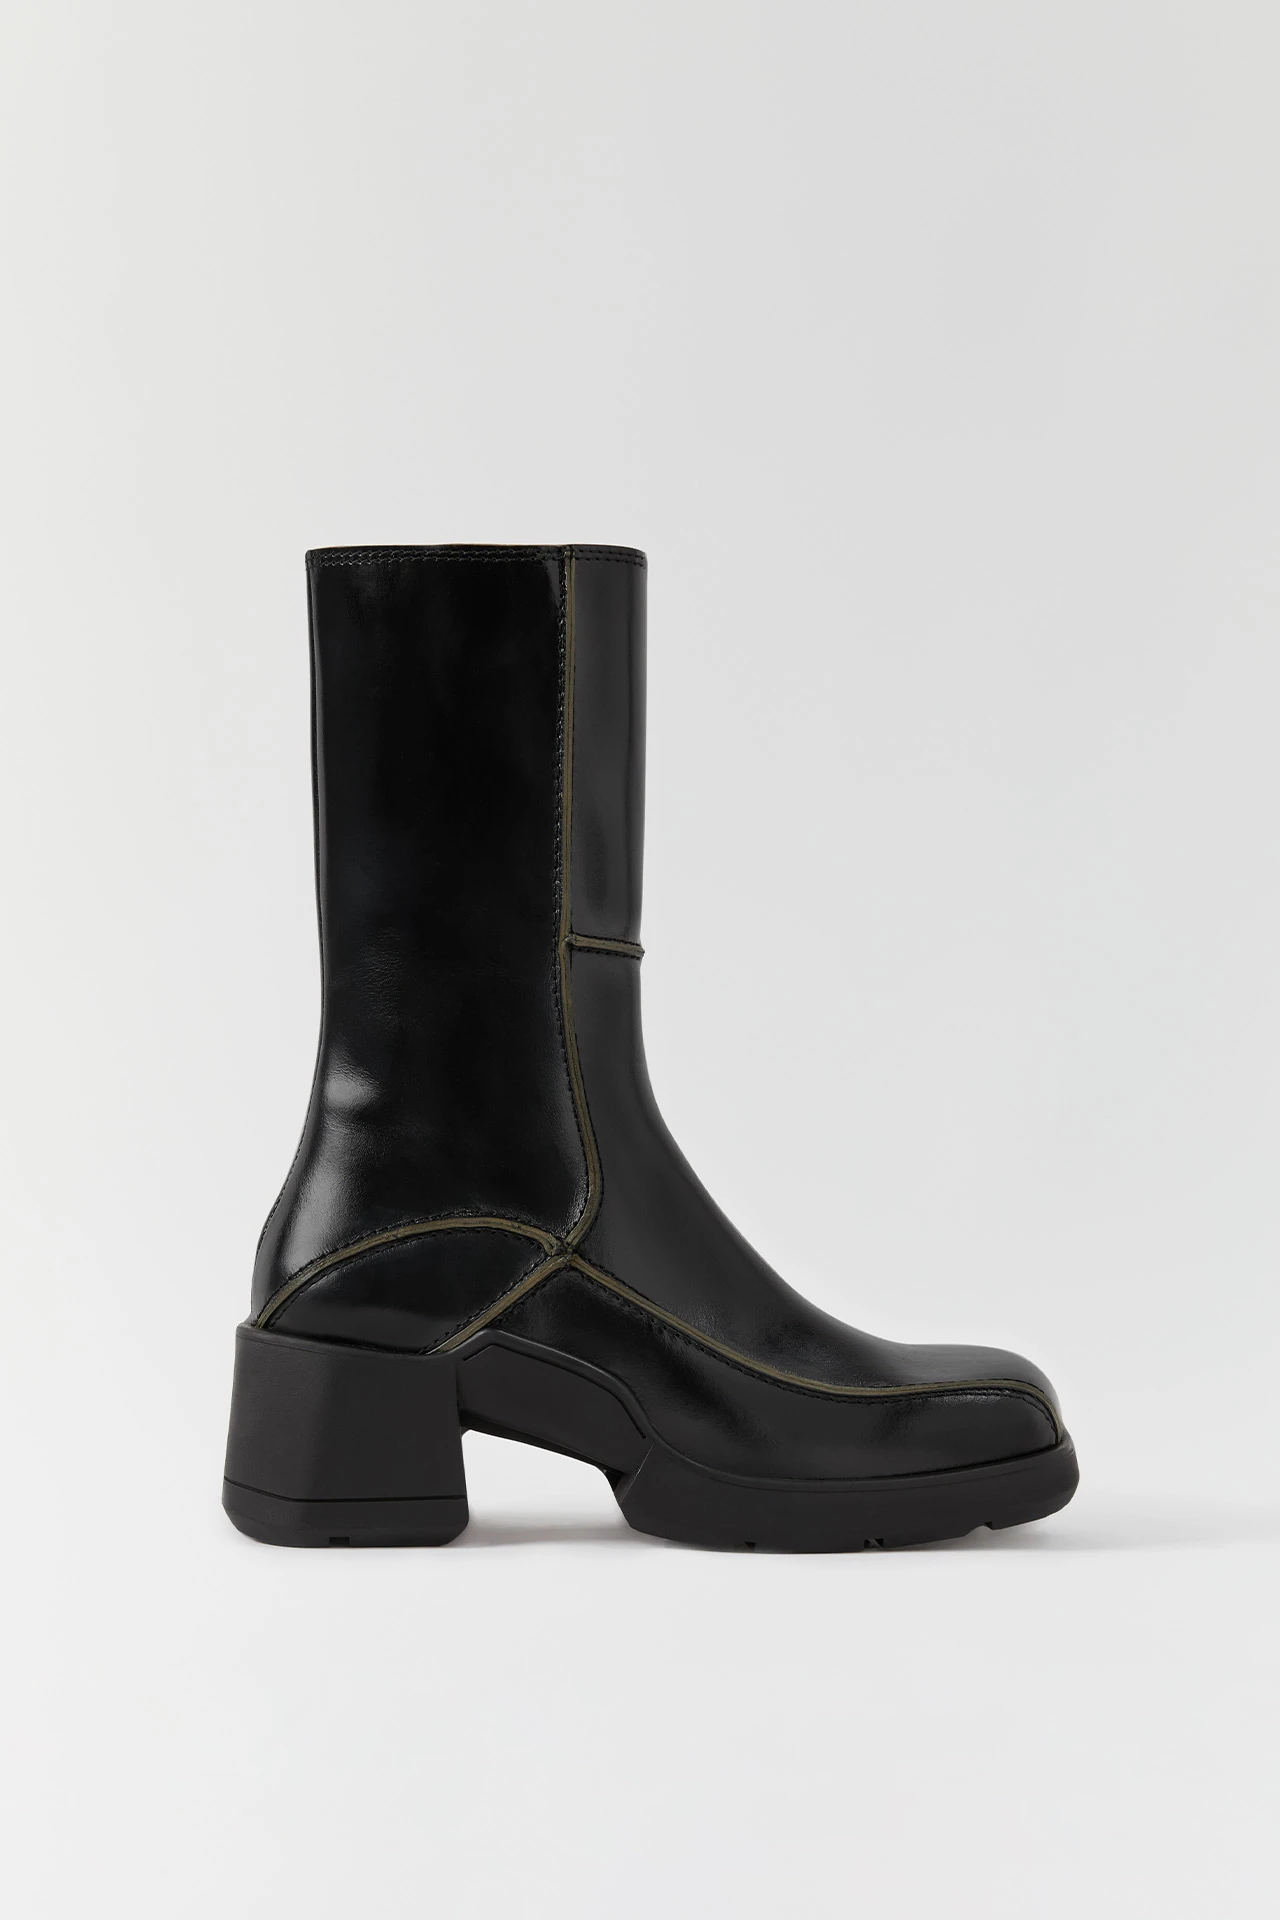 e8-meiko-black-boots-01